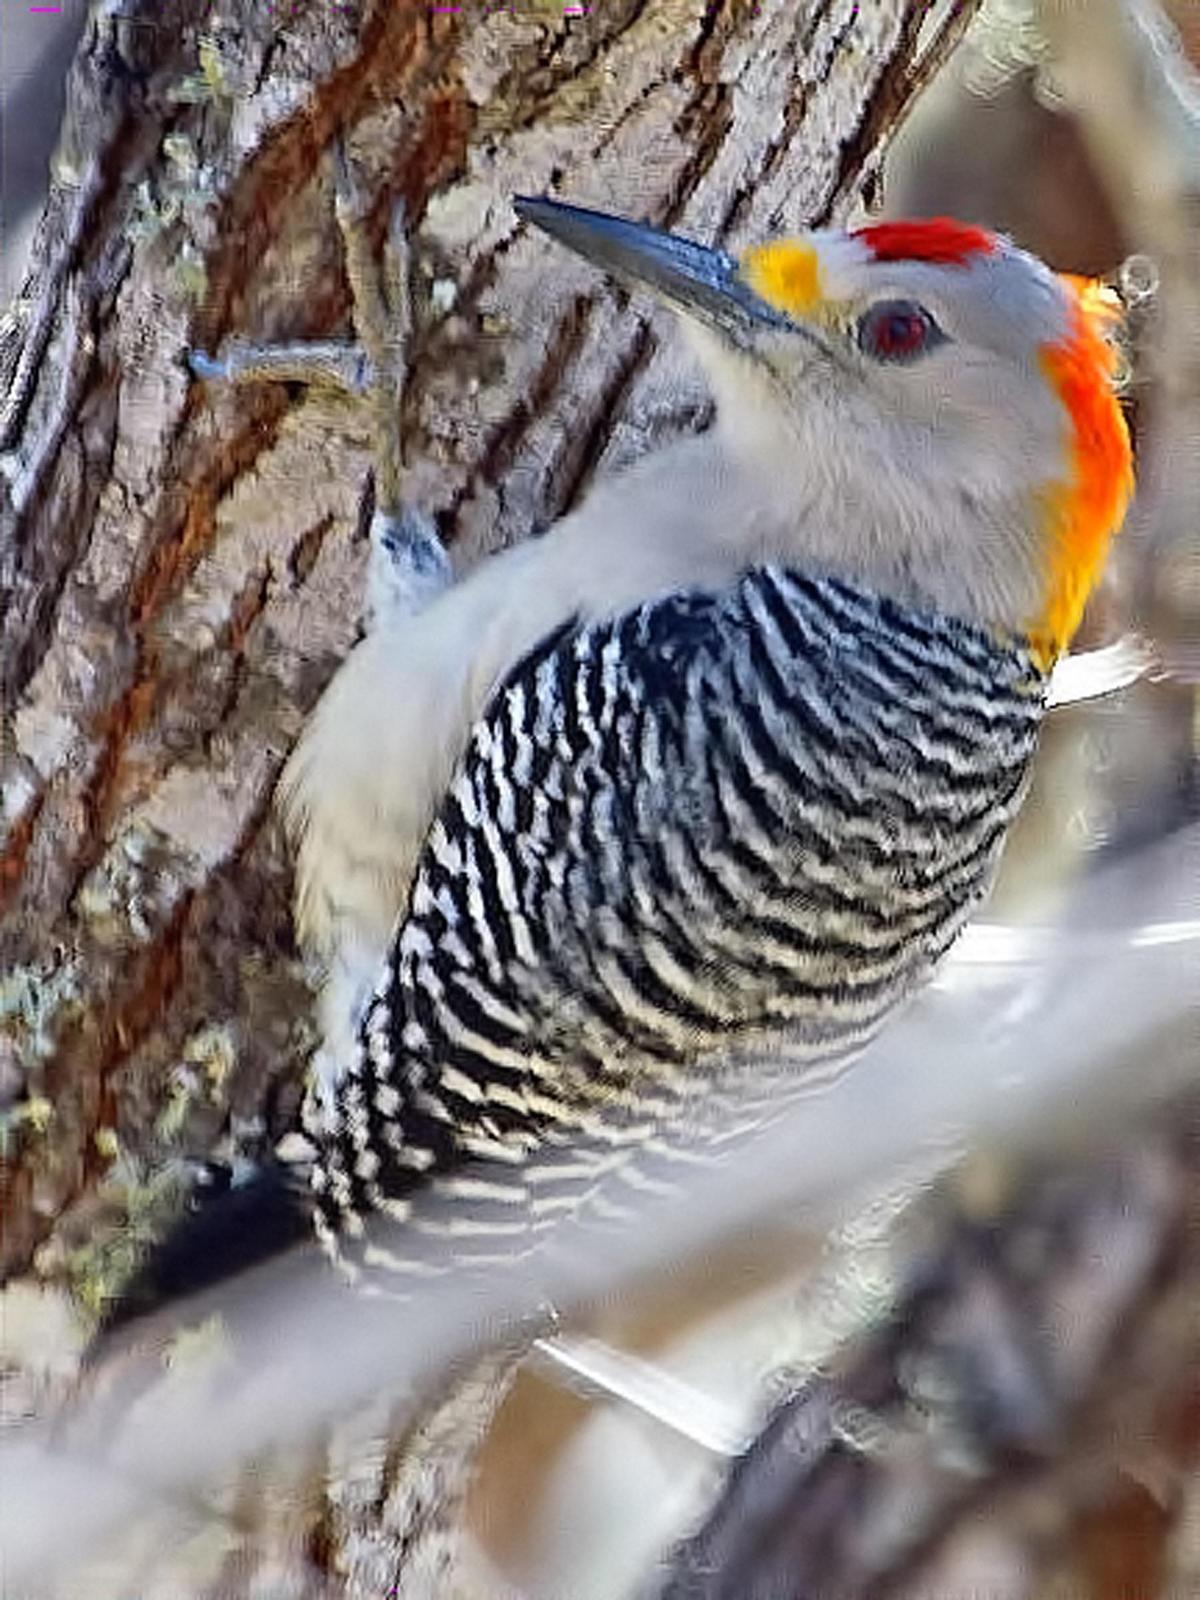 Golden-fronted Woodpecker Photo by Dan Tallman